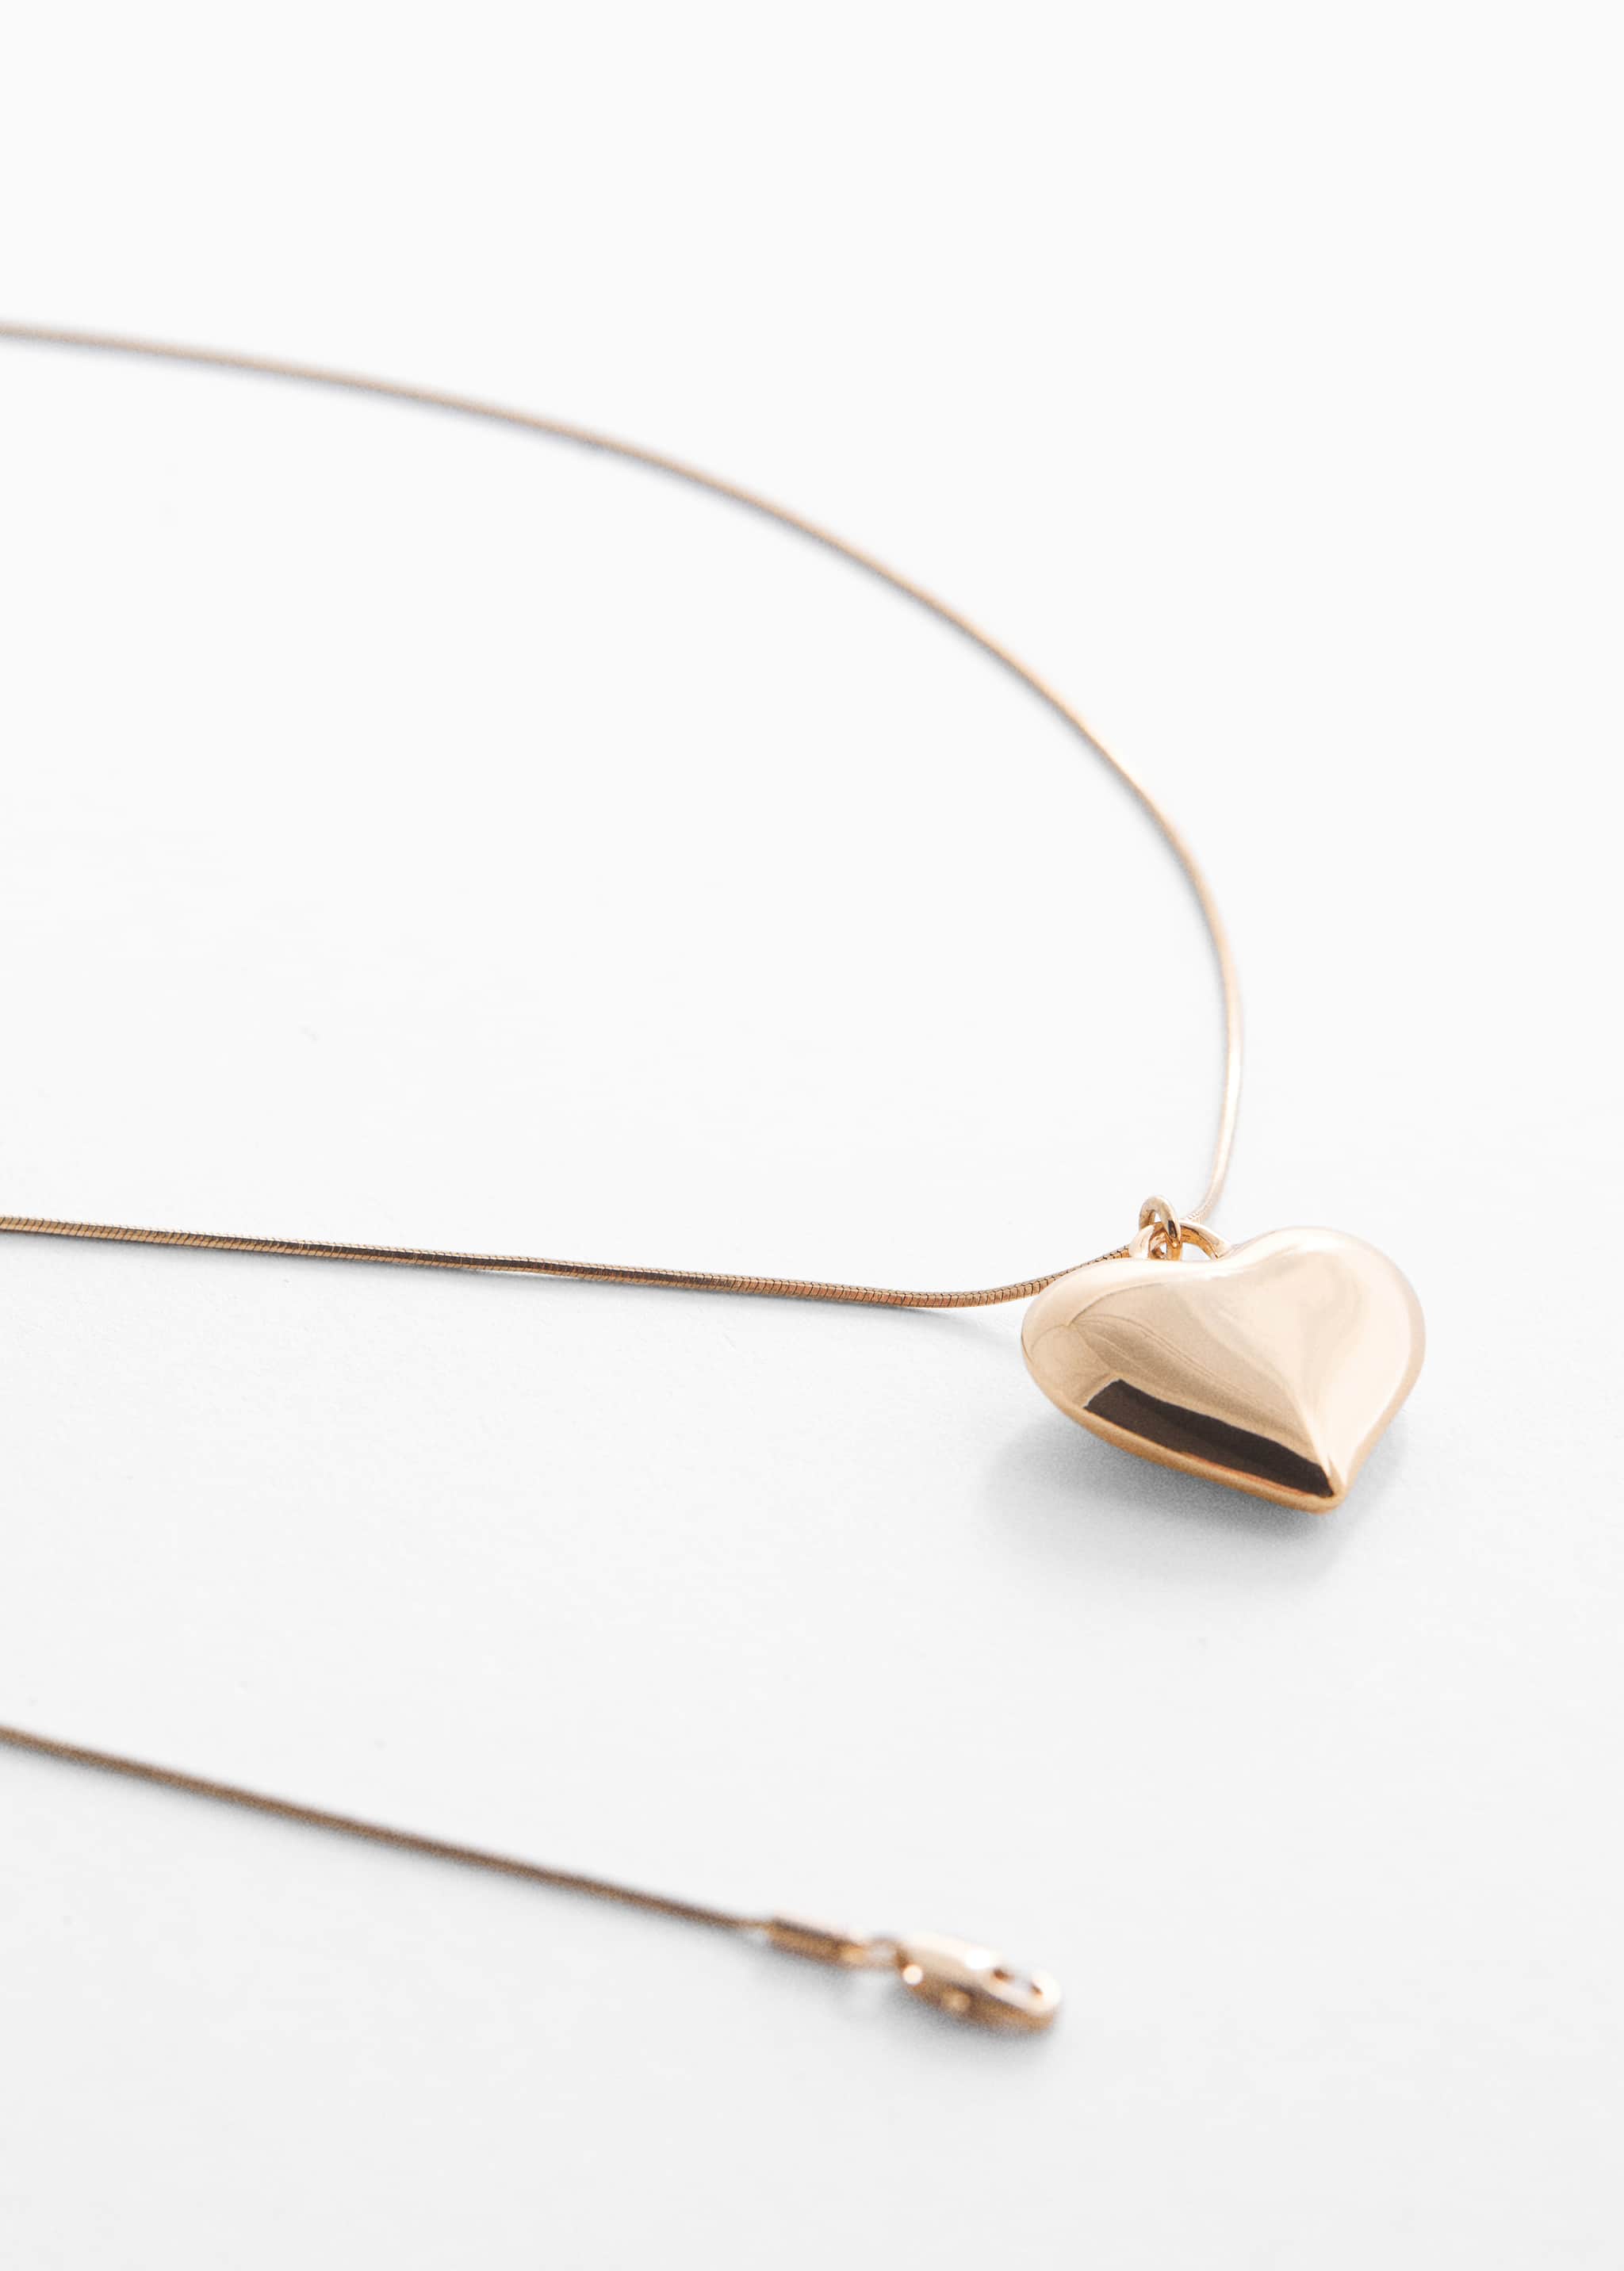 Heart necklace - Medium plane